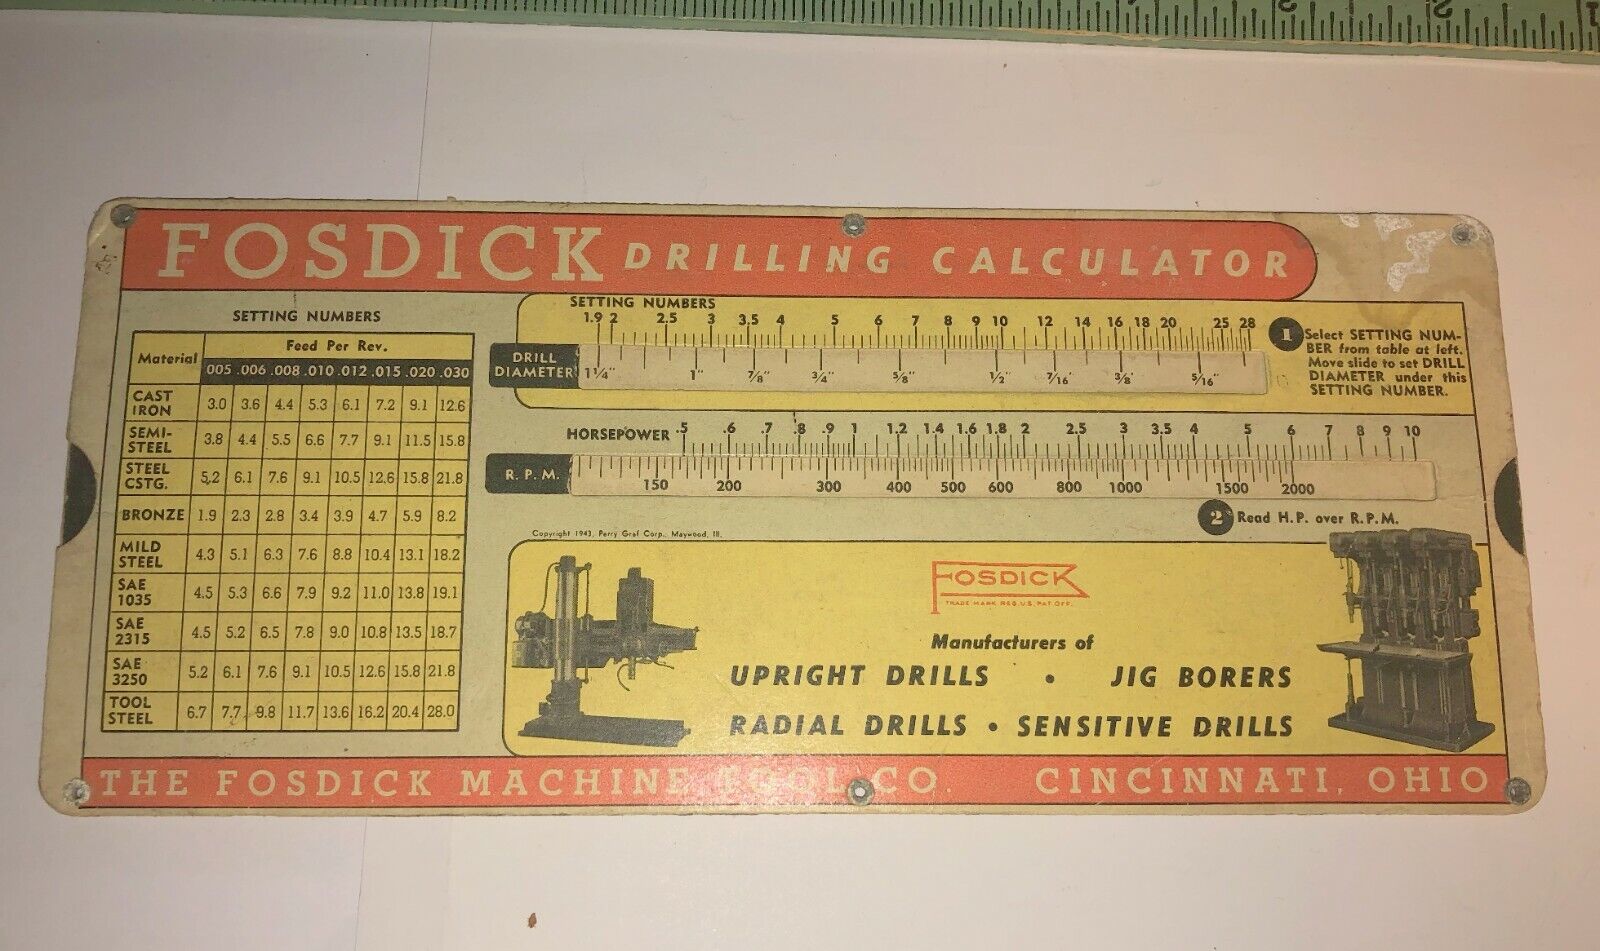 Vintage Slide rule Fosdick Drilling calculator upright drills radial drills